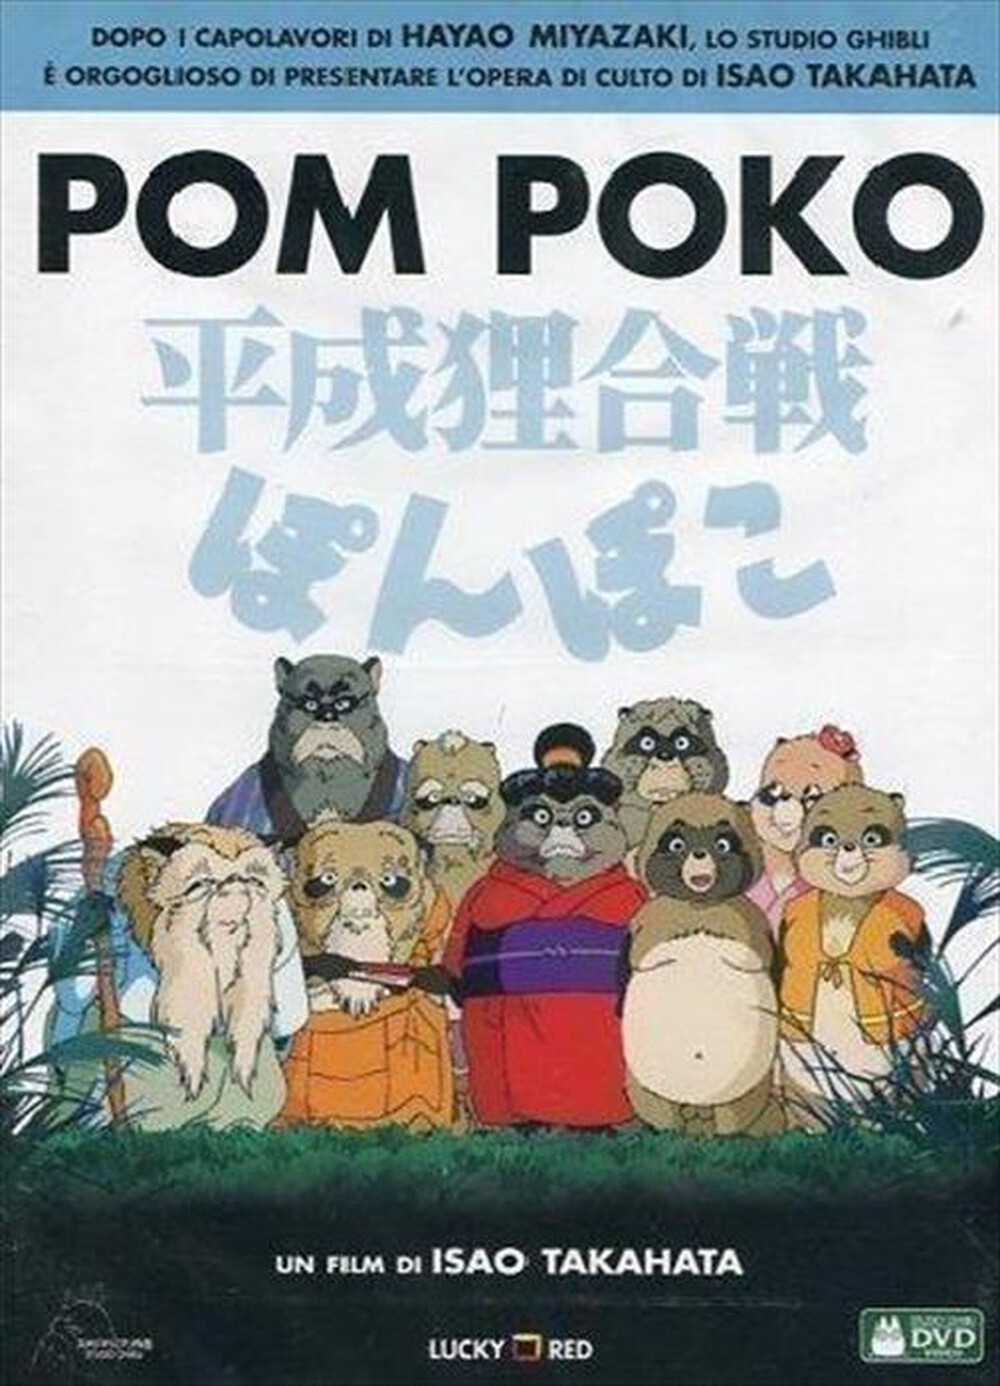 "WARNER HOME VIDEO - Pom Poko"